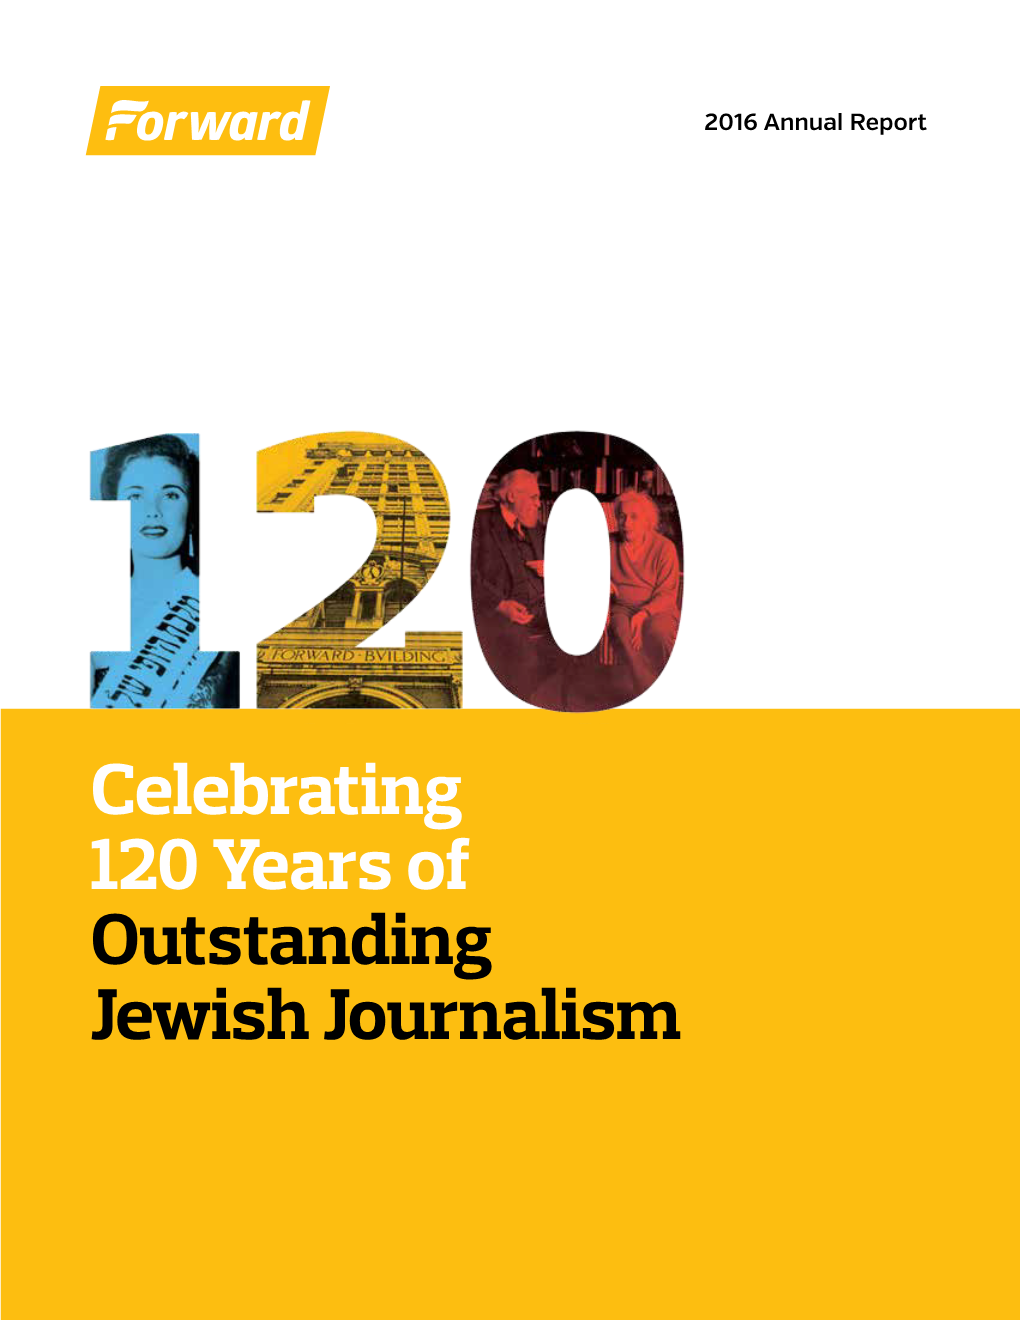 Celebrating 120 Years of Outstanding Jewish Journalism Dear Friends